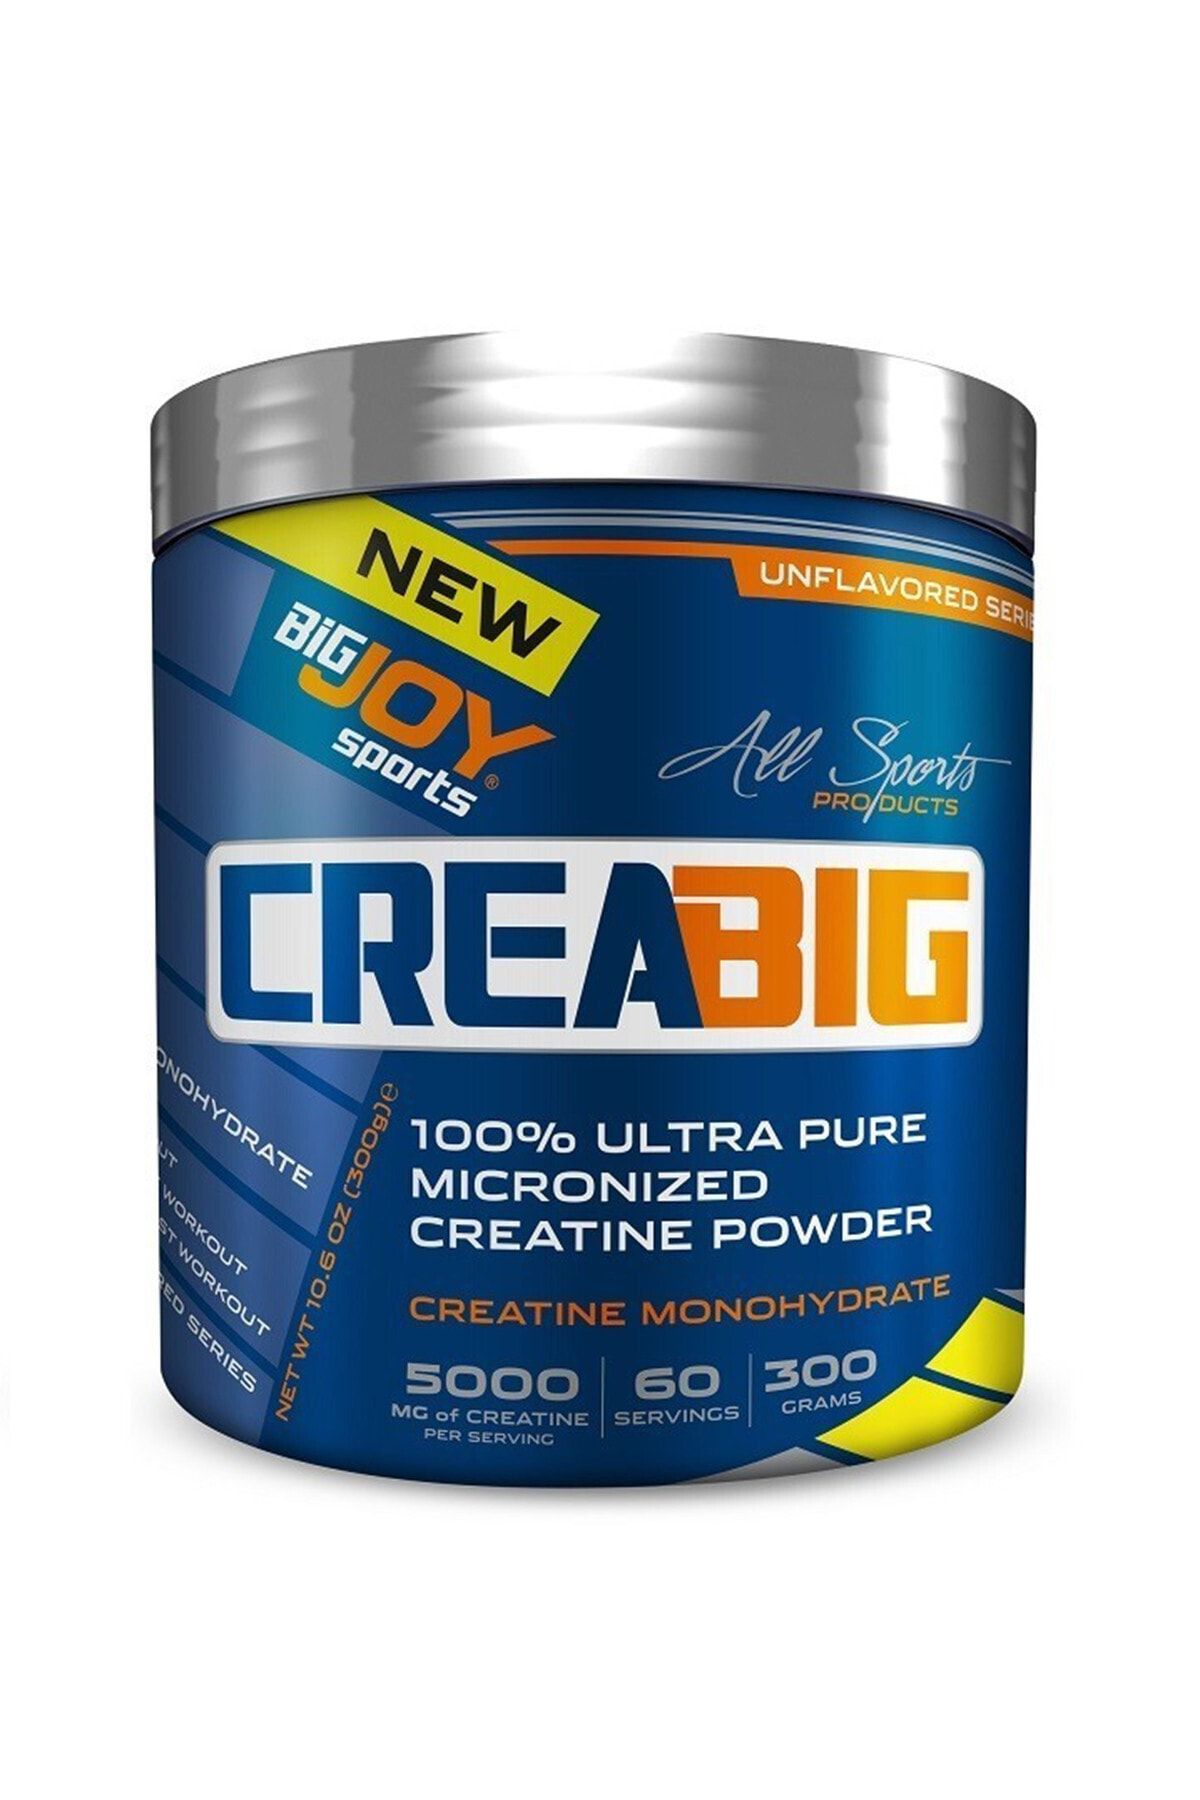 Bigjoy Sports Crea Big Micronized Creatine Powder 300 G Skrbgj011000